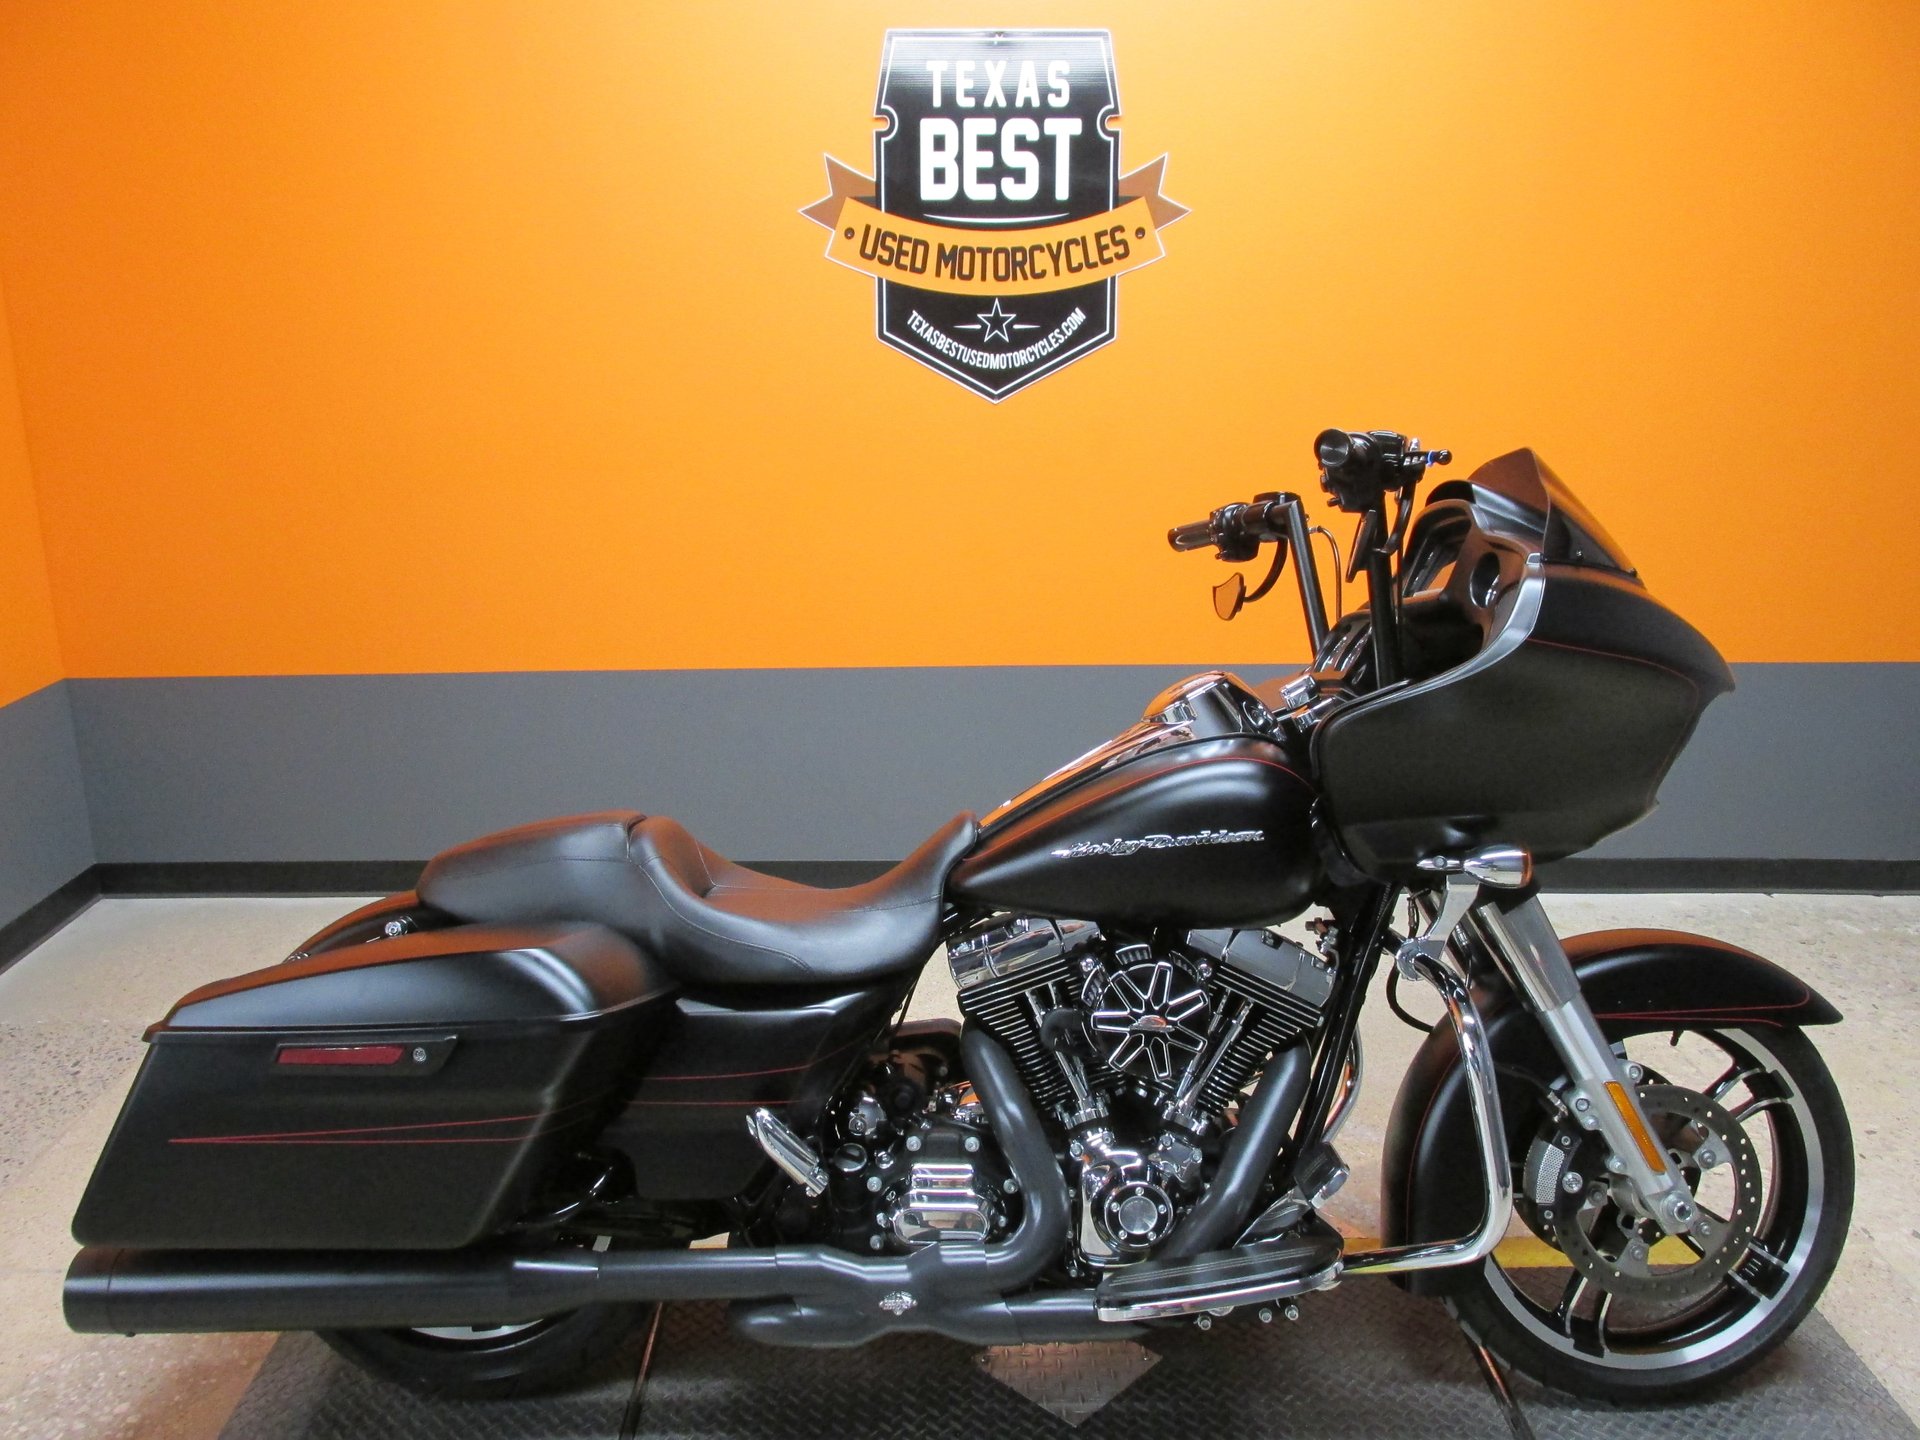 2015 Harley Davidson Road Glide American Motorcycle Trading Company Used Harley Davidson Motorcycles